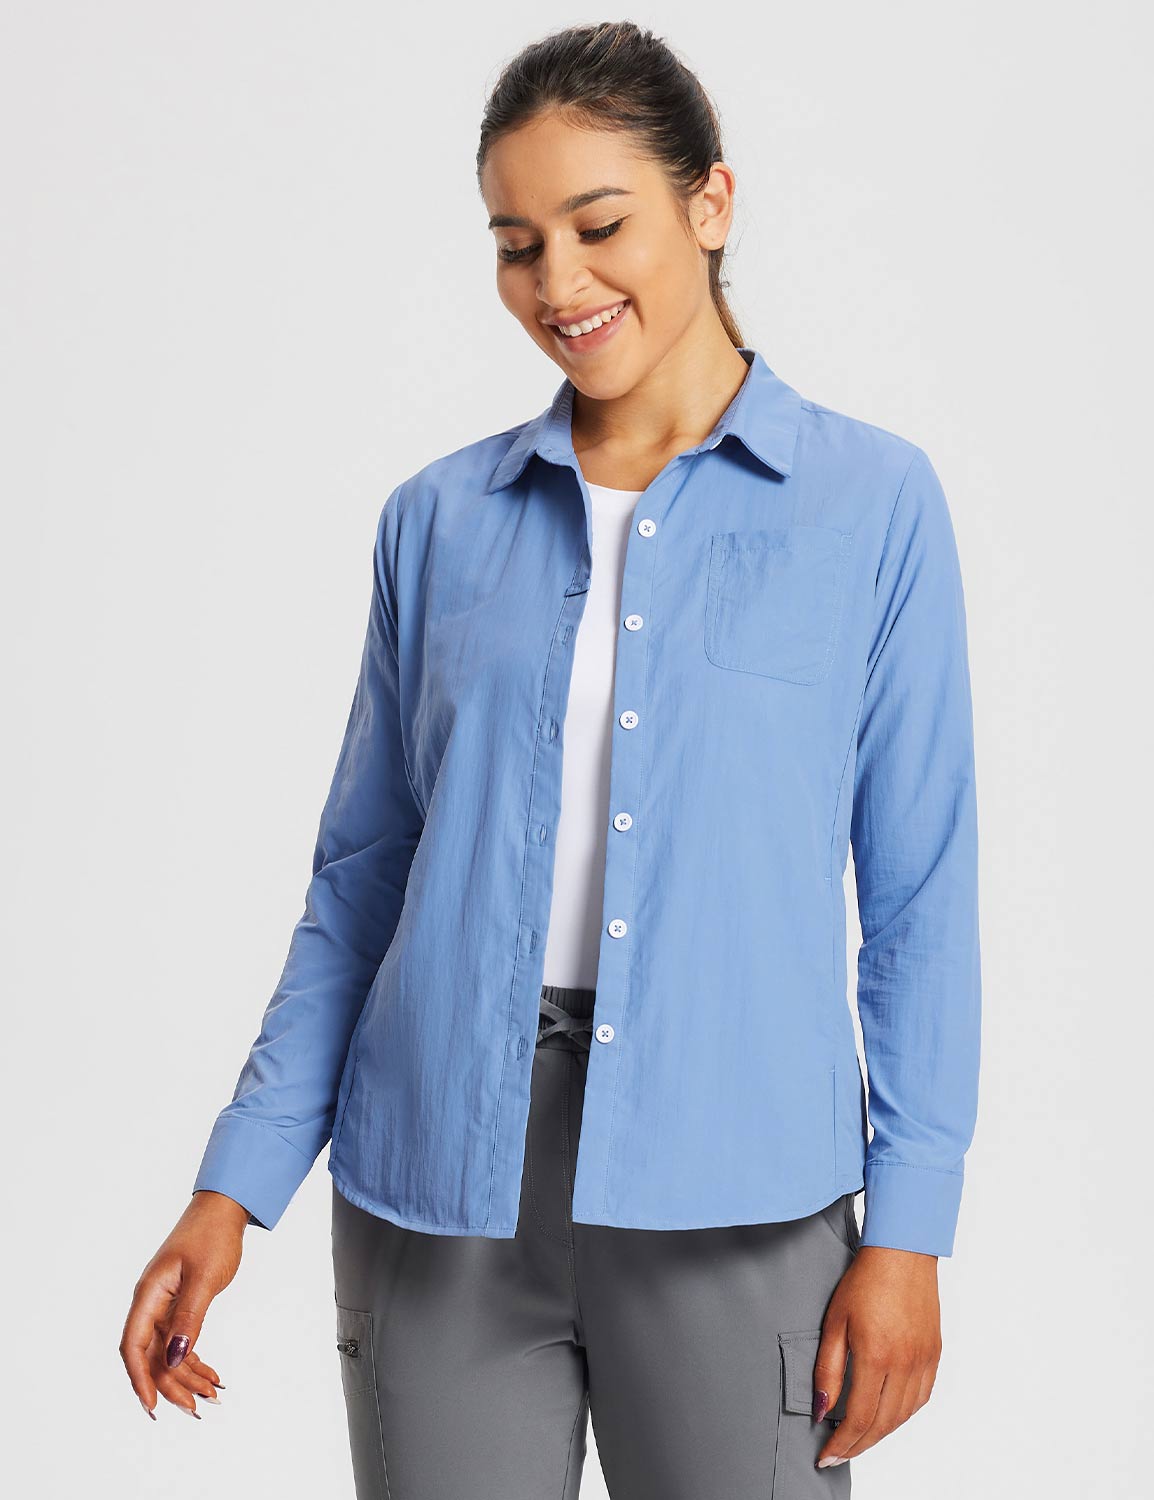 Baleaf Women's Quick-Dry UPF 50+ Sun Shirts Ashleigh Blue Side